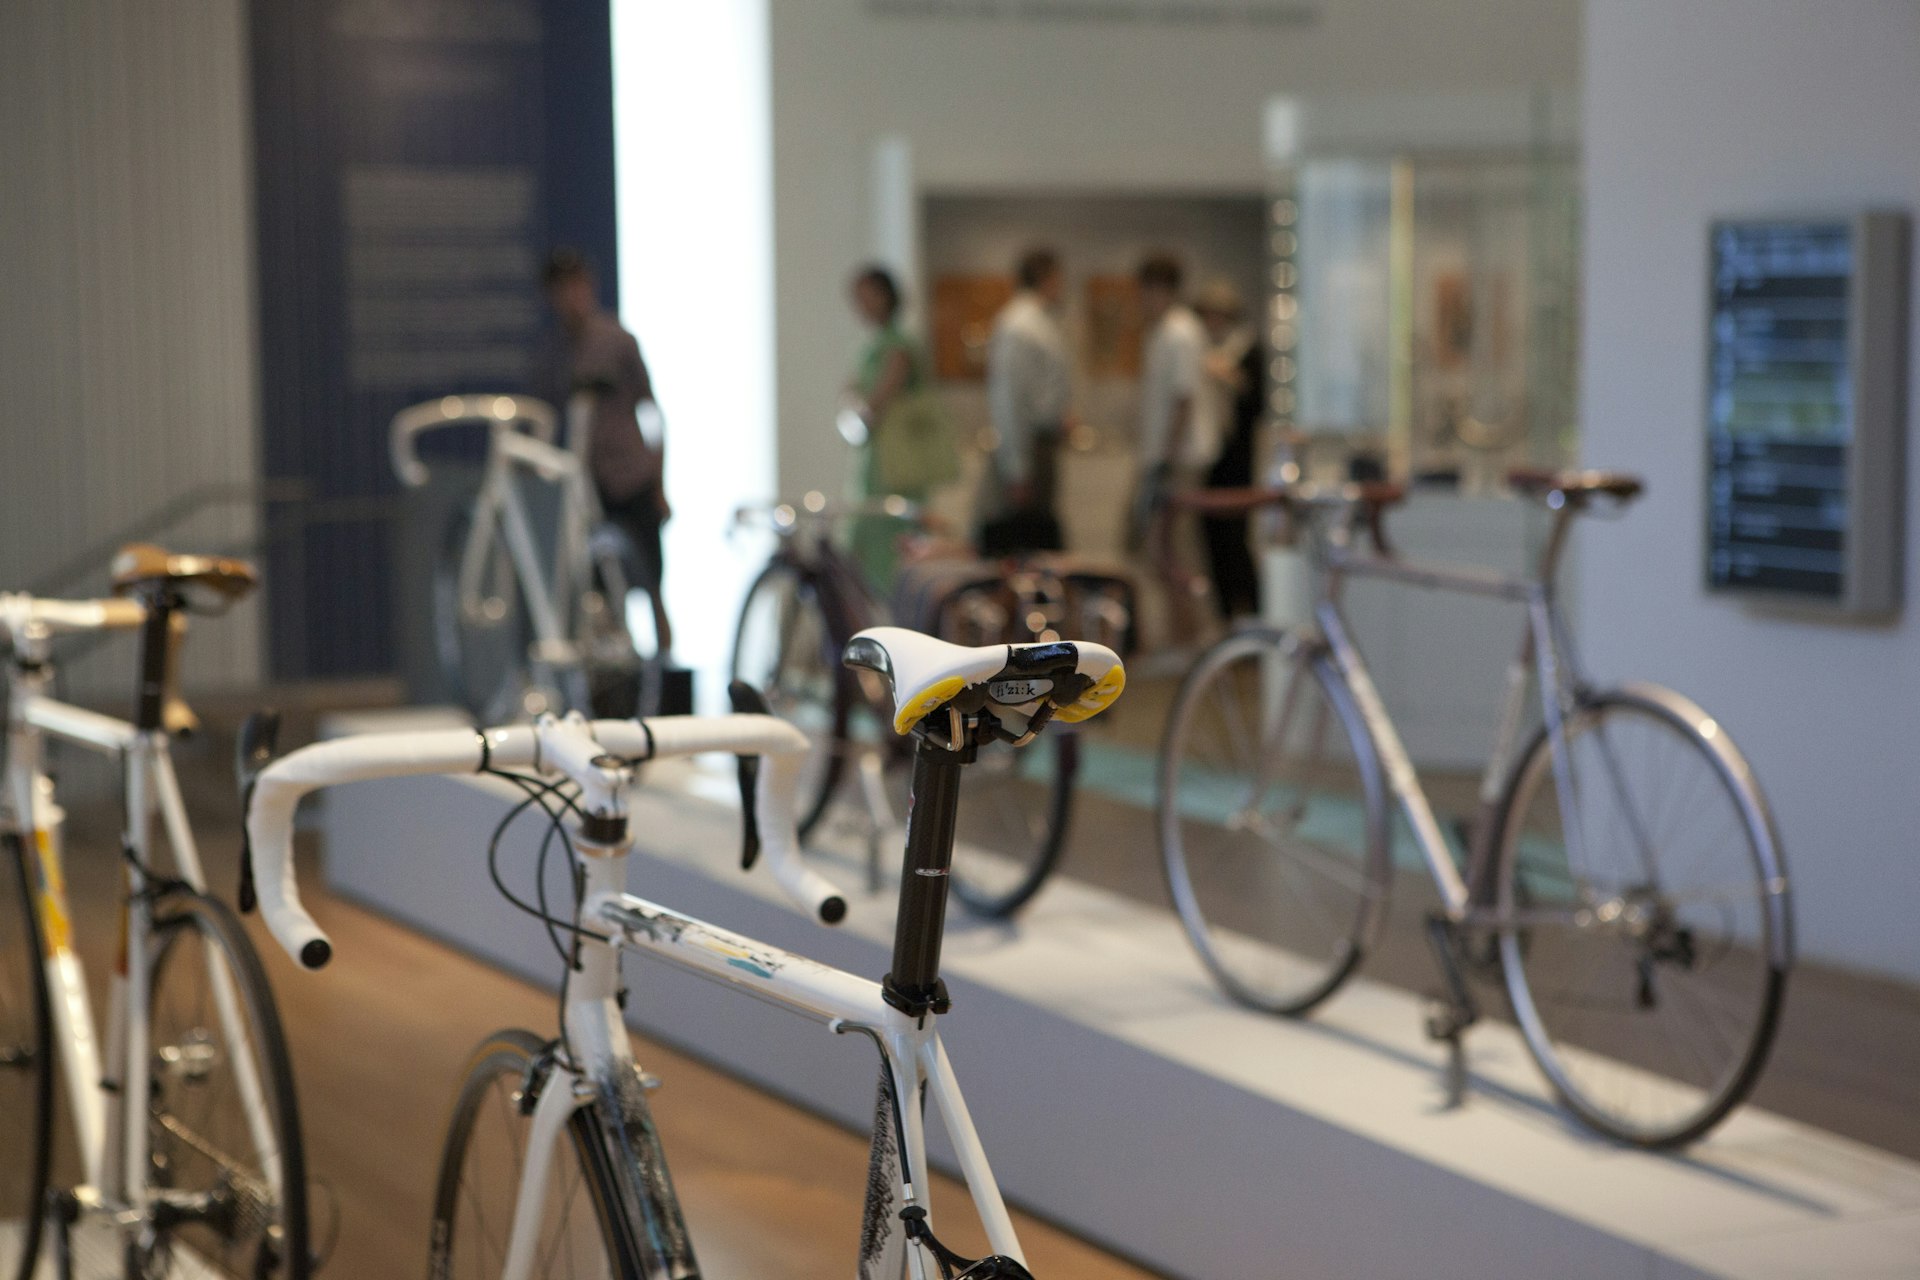 Bicycles in Museum of Arts and Design. ©Dan Herrick/Lonely Planet